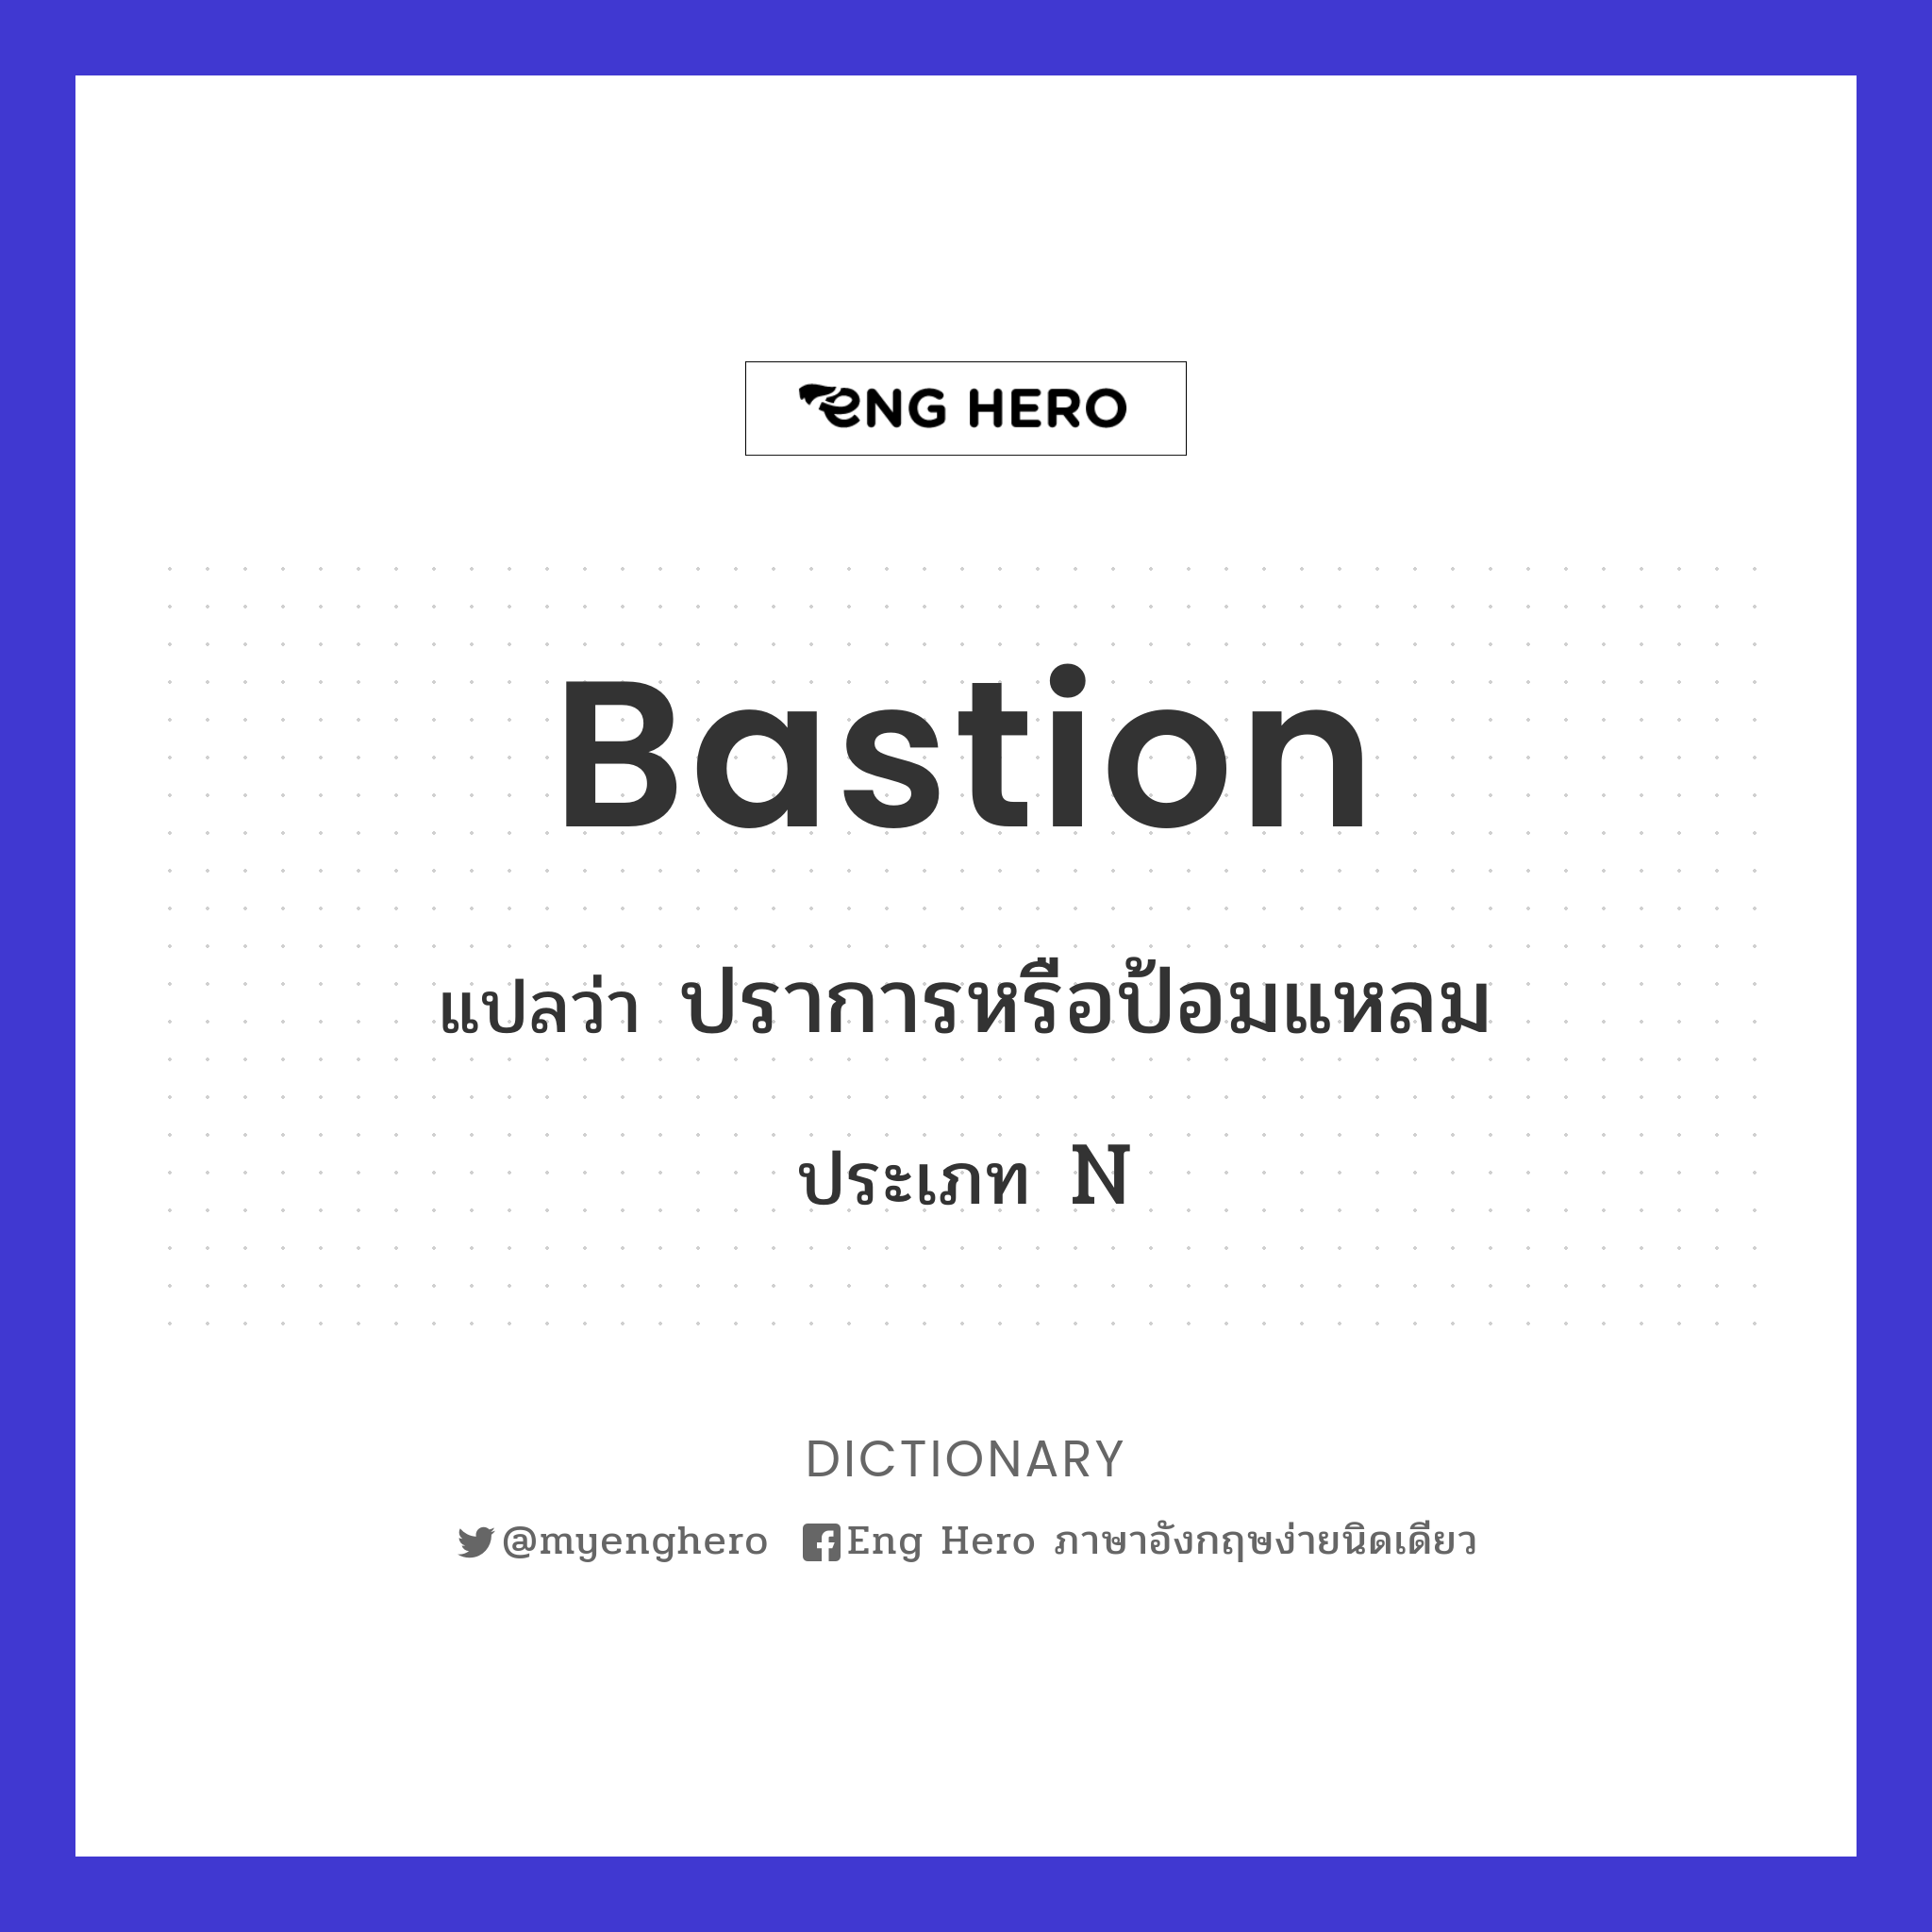 bastion